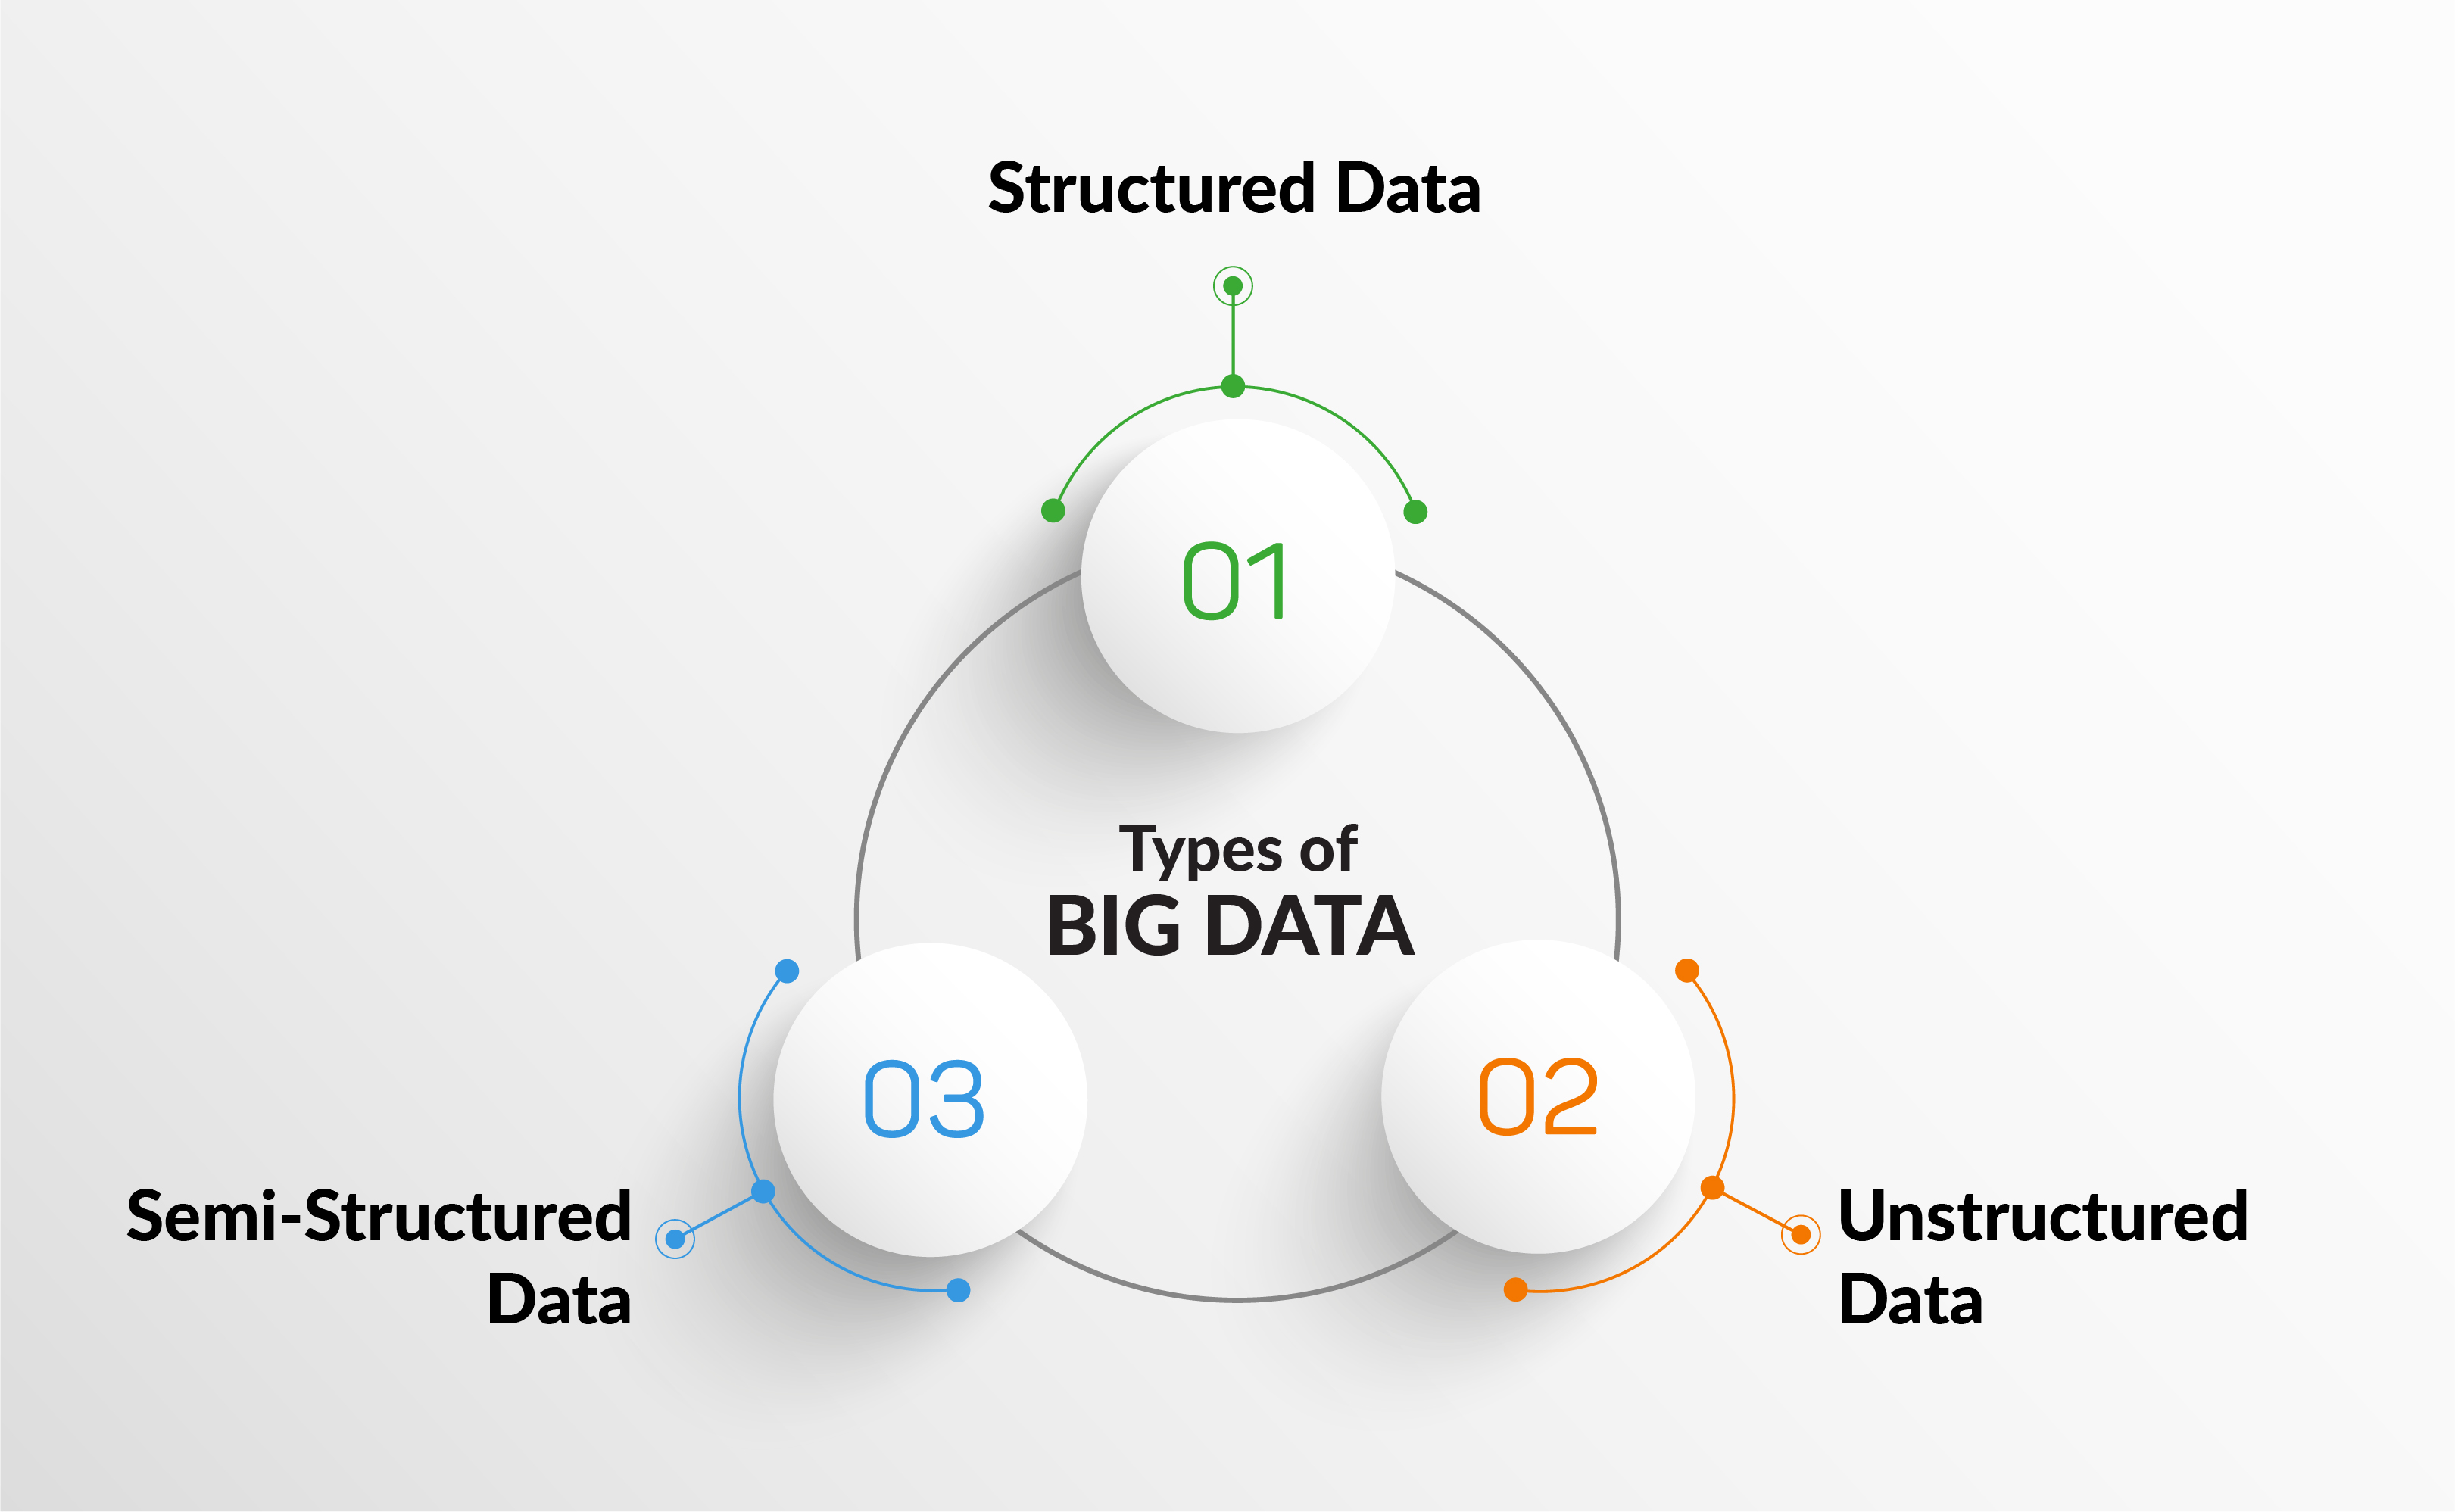 Types of Big Data